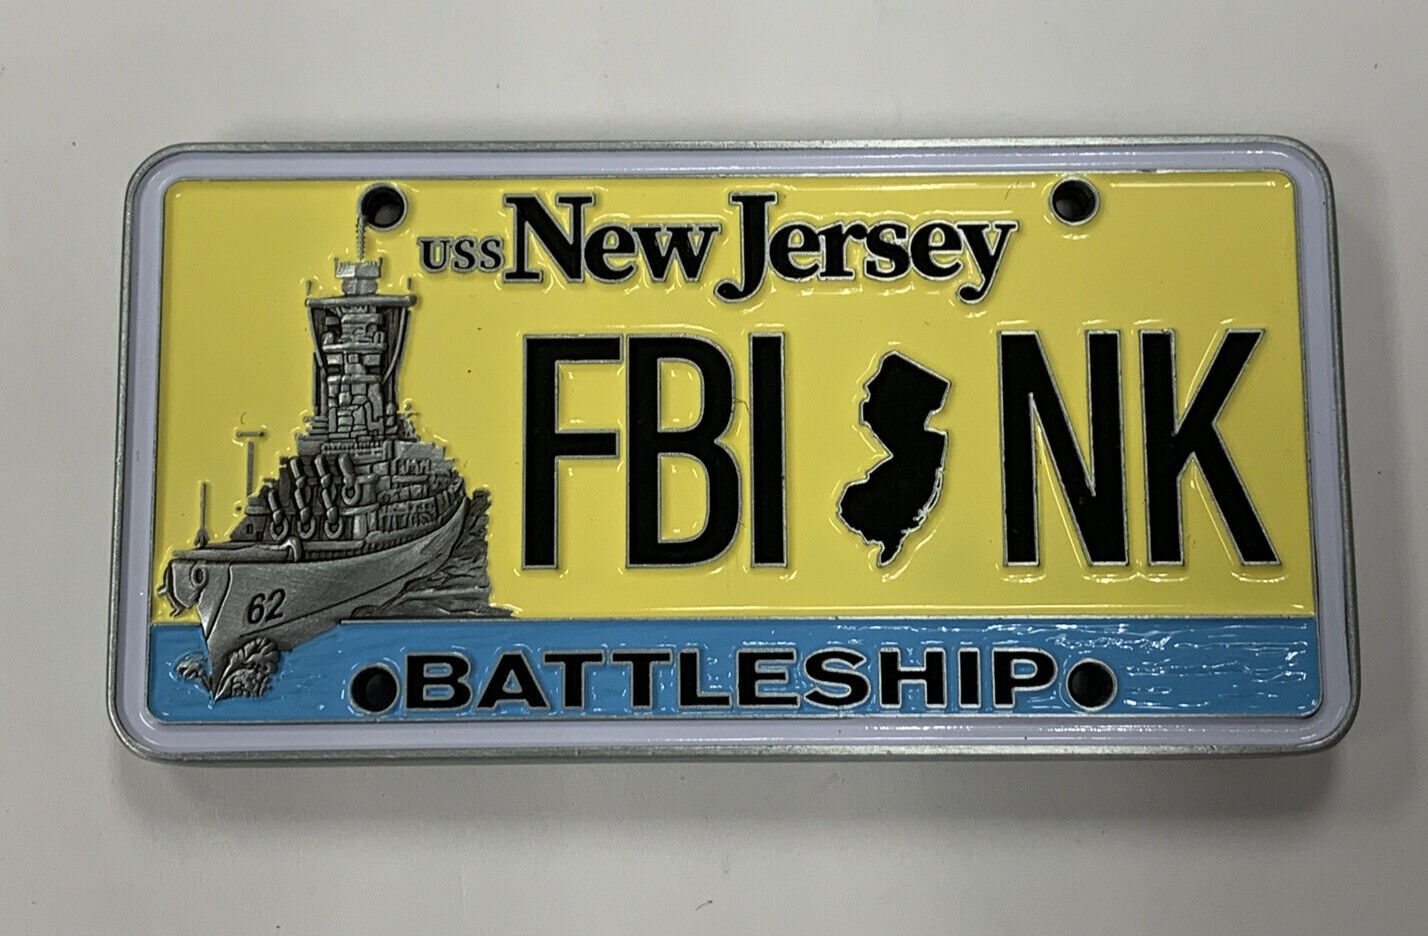 FBI Newark Division License Plate New Jersey Battleship Challenge Coin